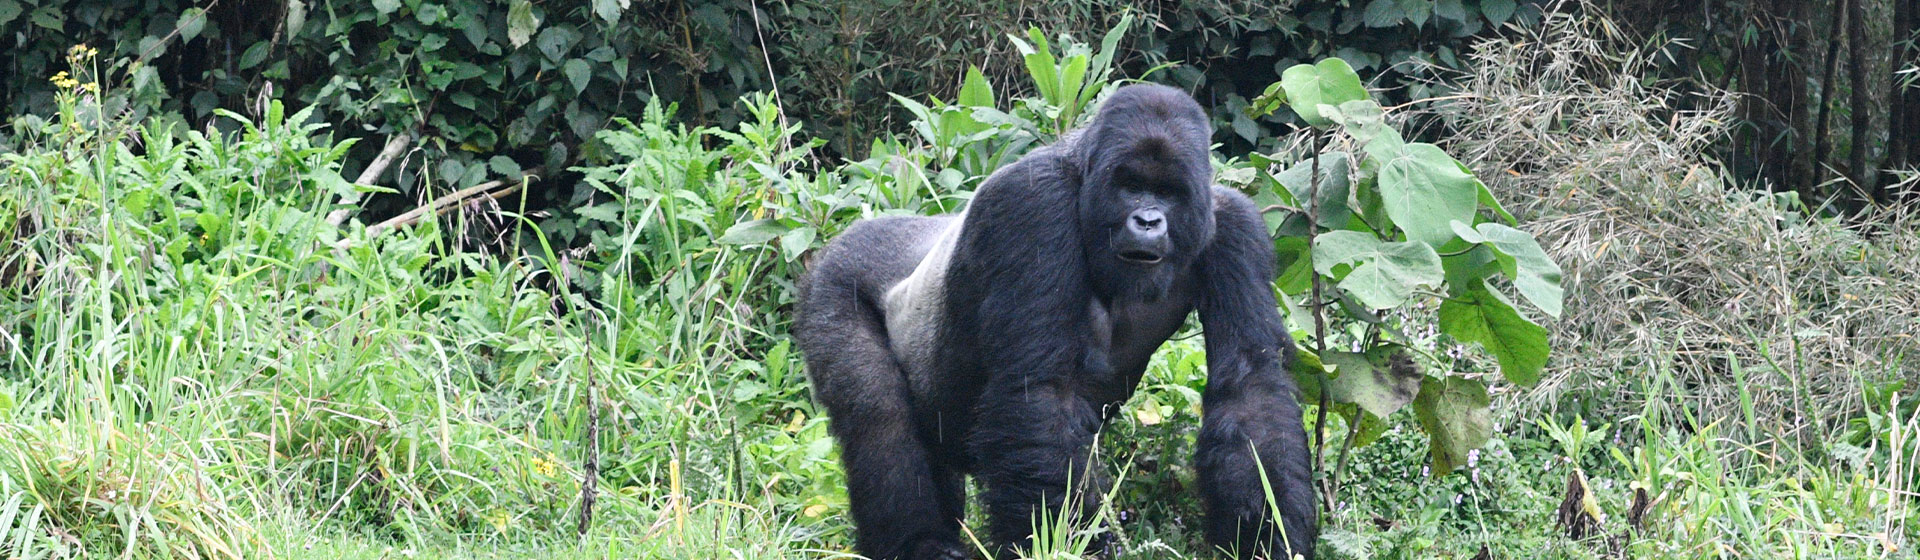 10 Days Best Of Uganda Gorilla Encounter Adventure Safari